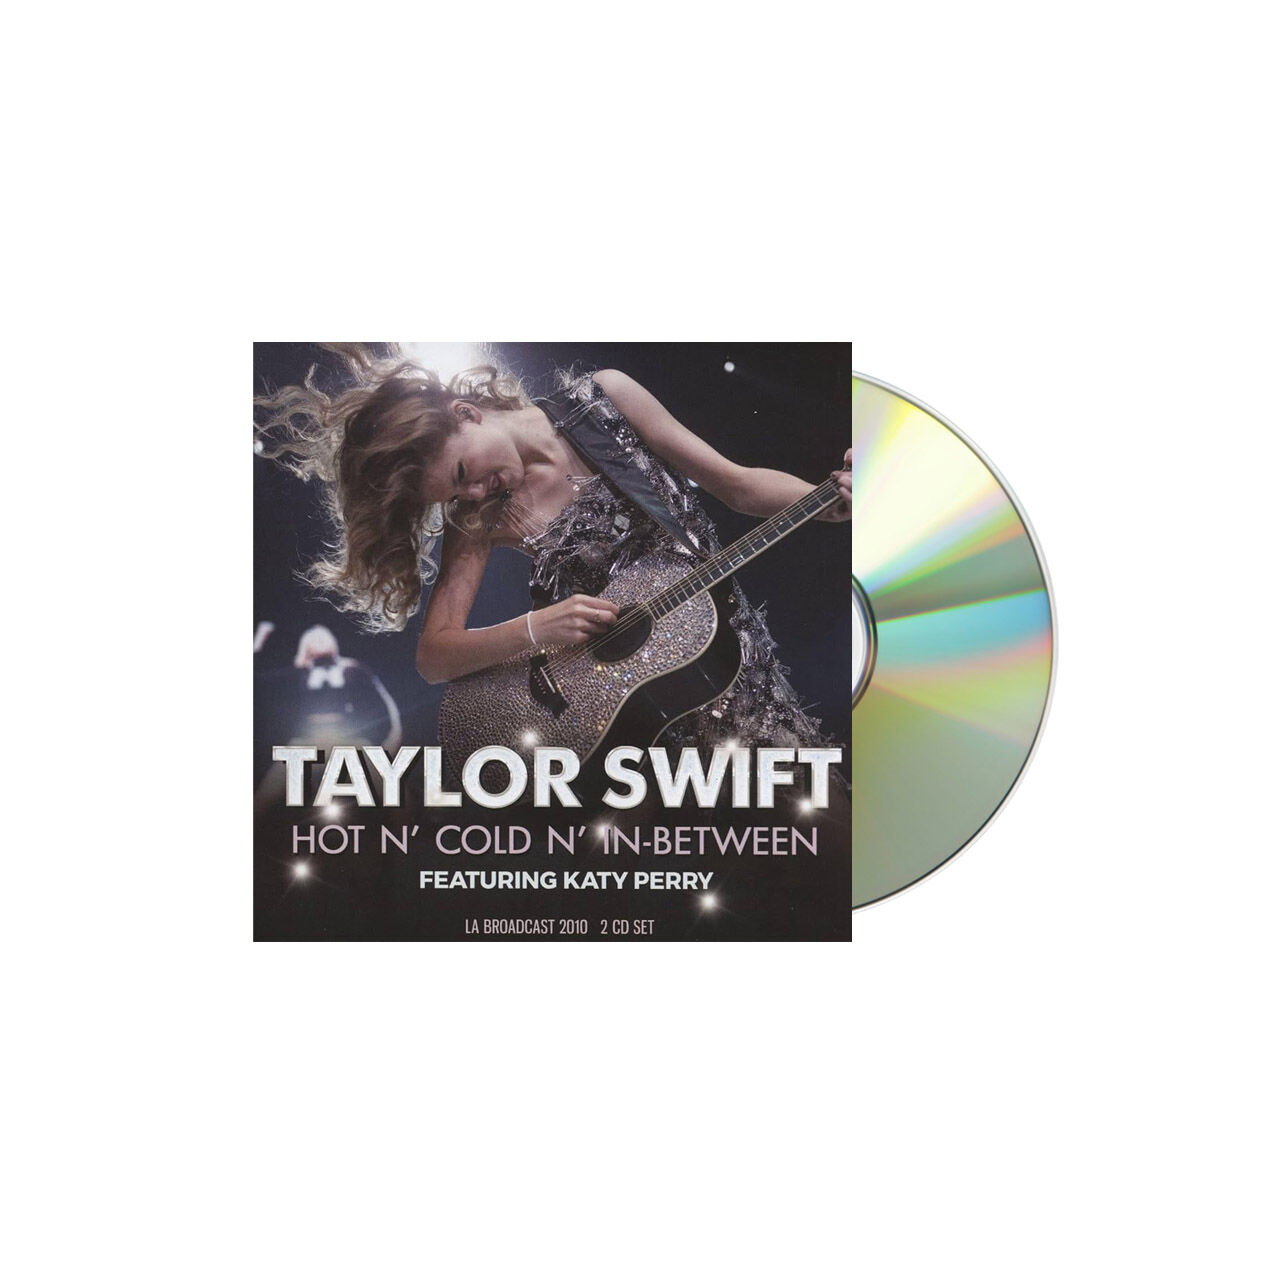 TAYLOR SWIFT Hot N’ Cold N’ In-between Jewel Case CD